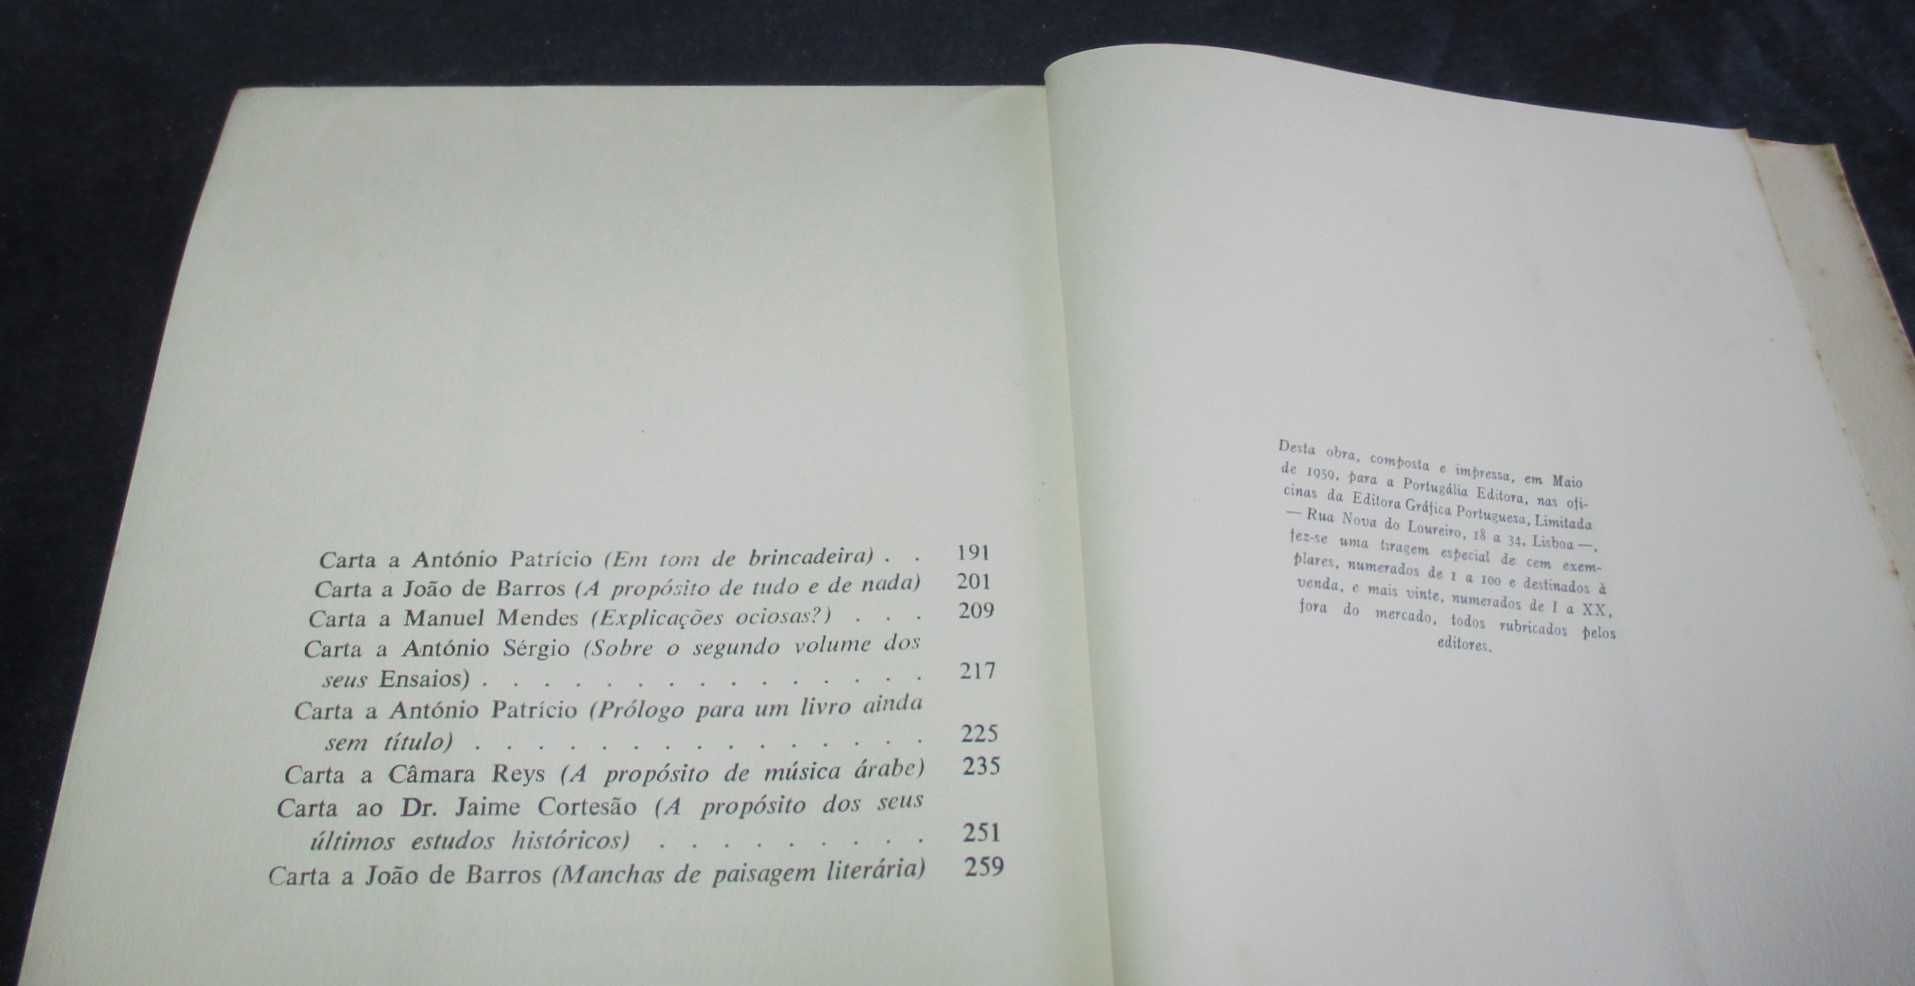 Livro Miscelânea Manuel Teixeira-Gomes